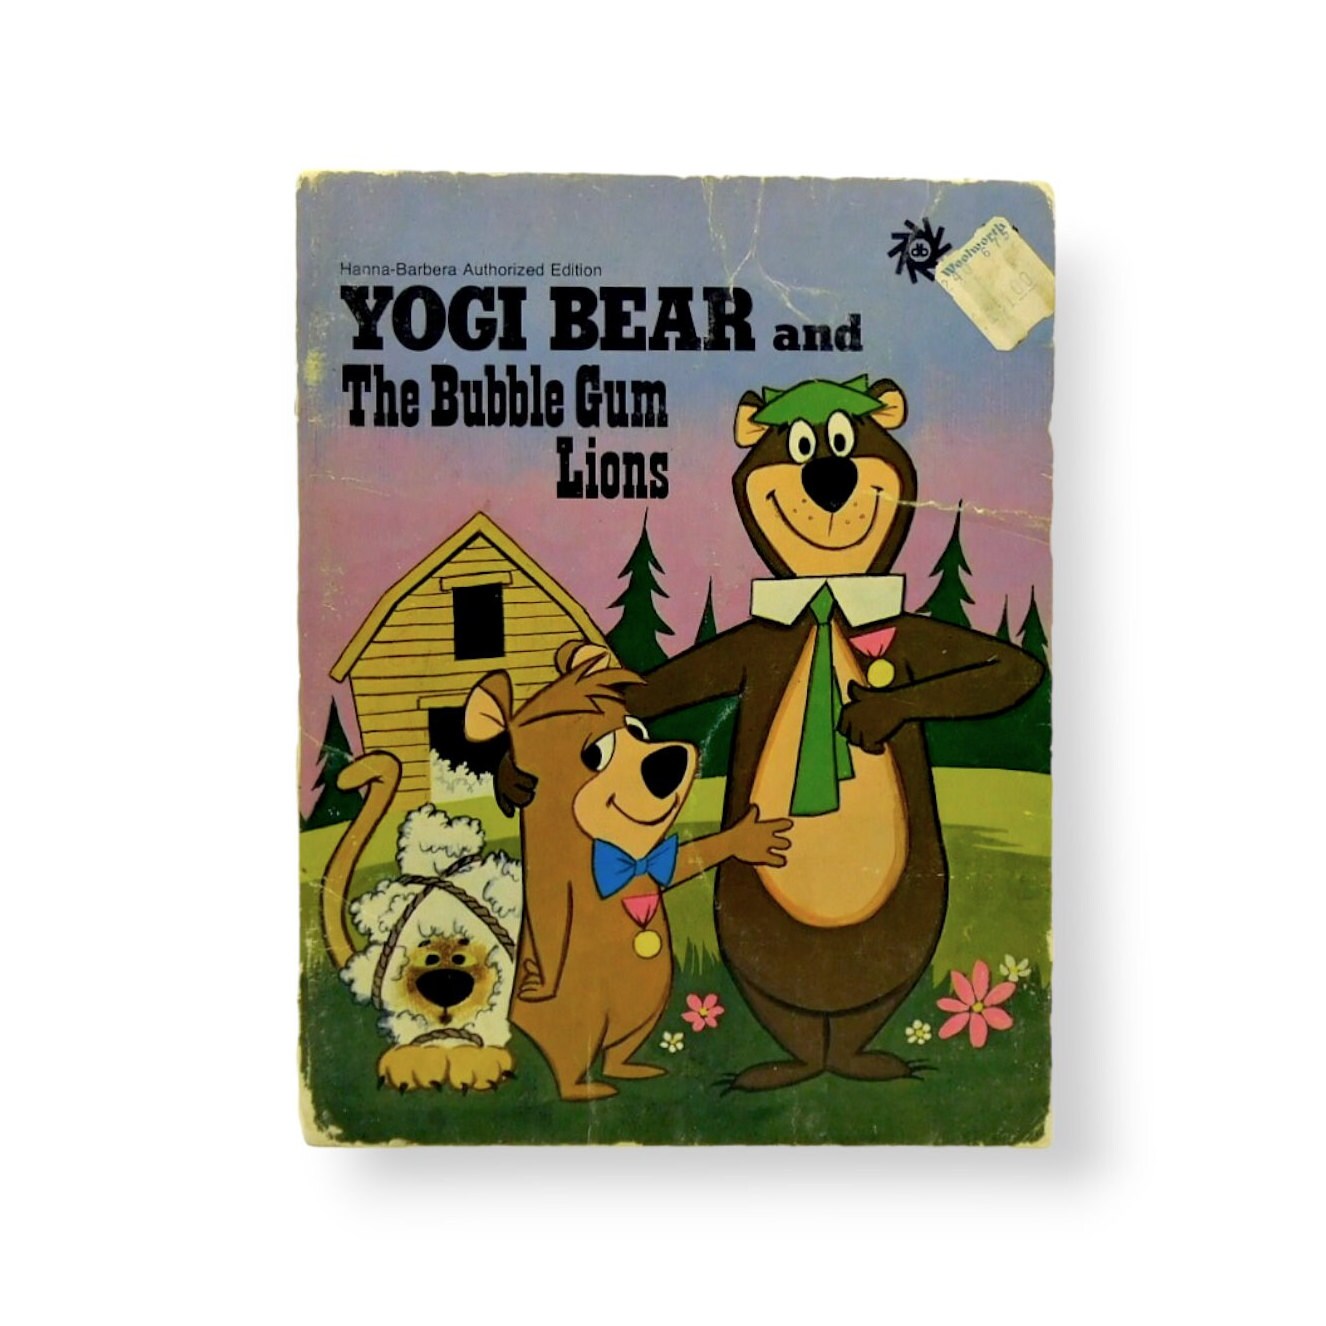 Yogi Bear and The Bubble Gum Lions by Horace J. Elias 1974 (Durabook)